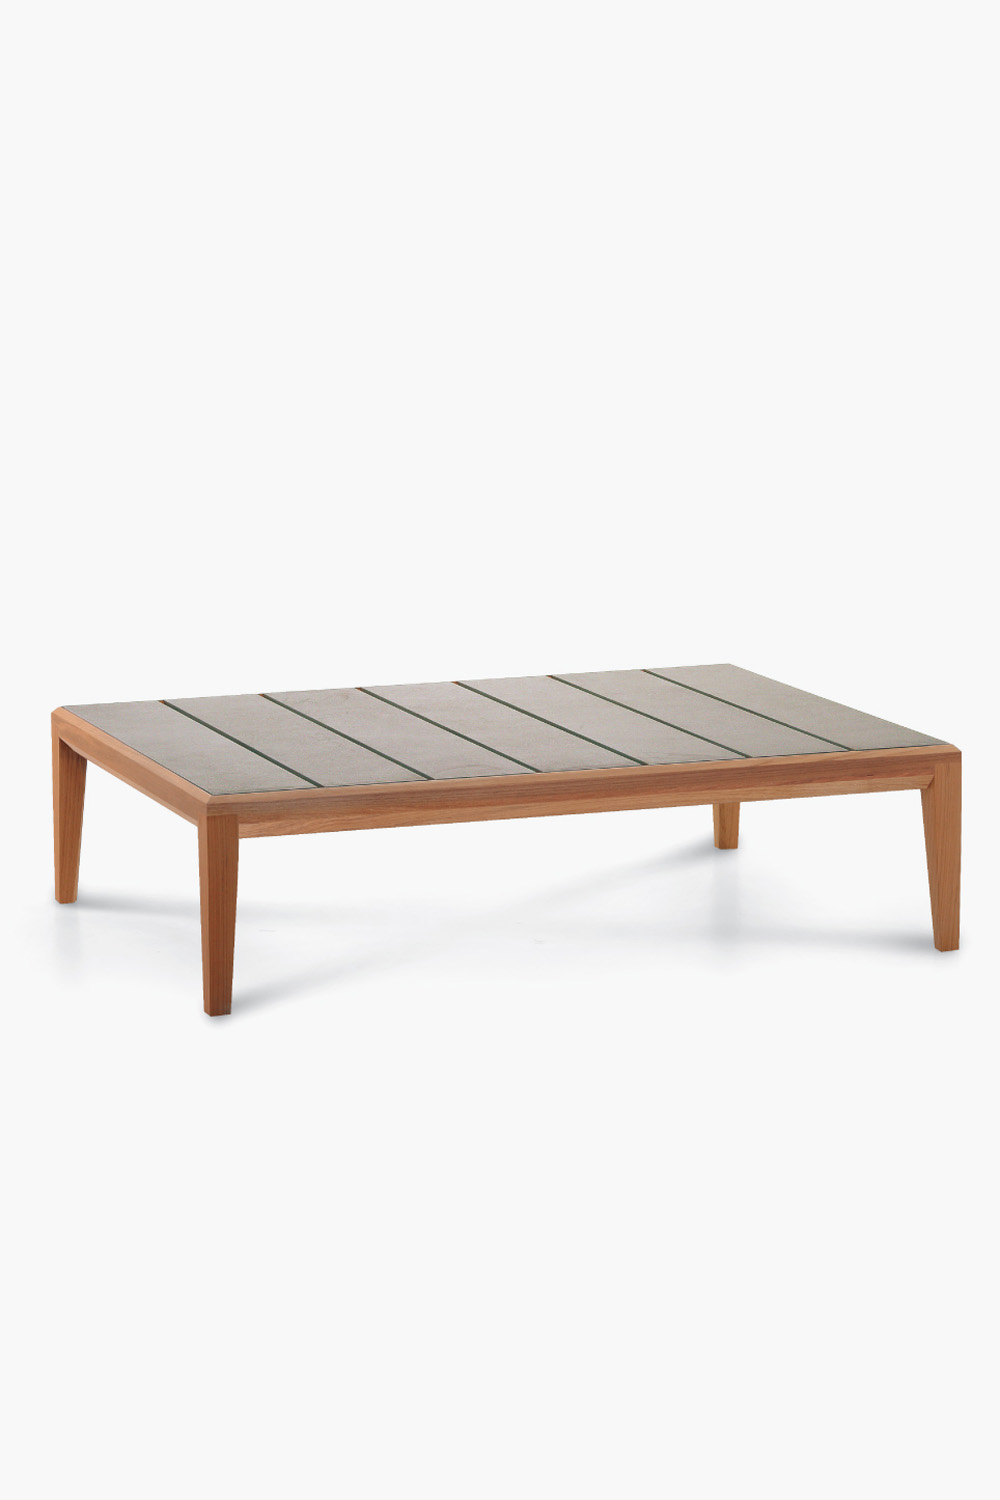 RODA Low Table Benches Teka 01